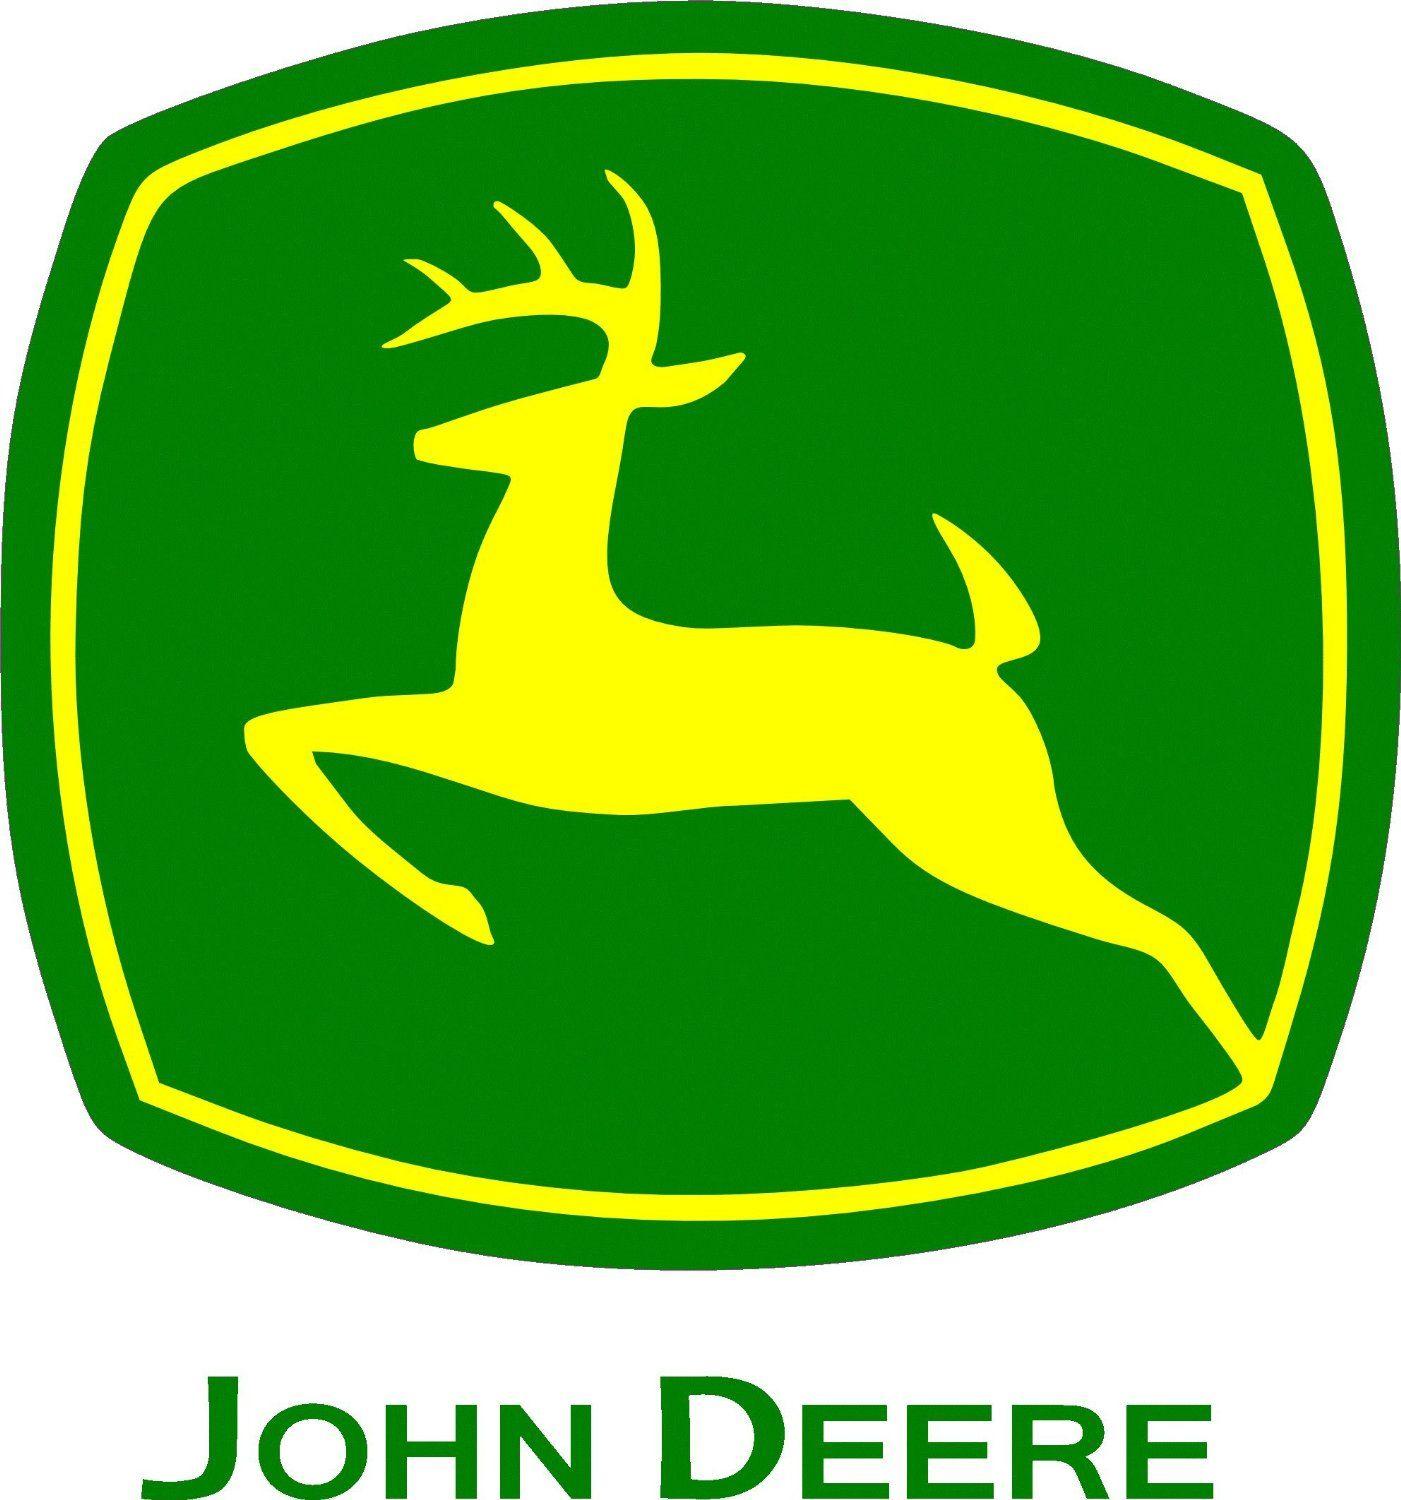 John Deere Logo Wallpapers 2016